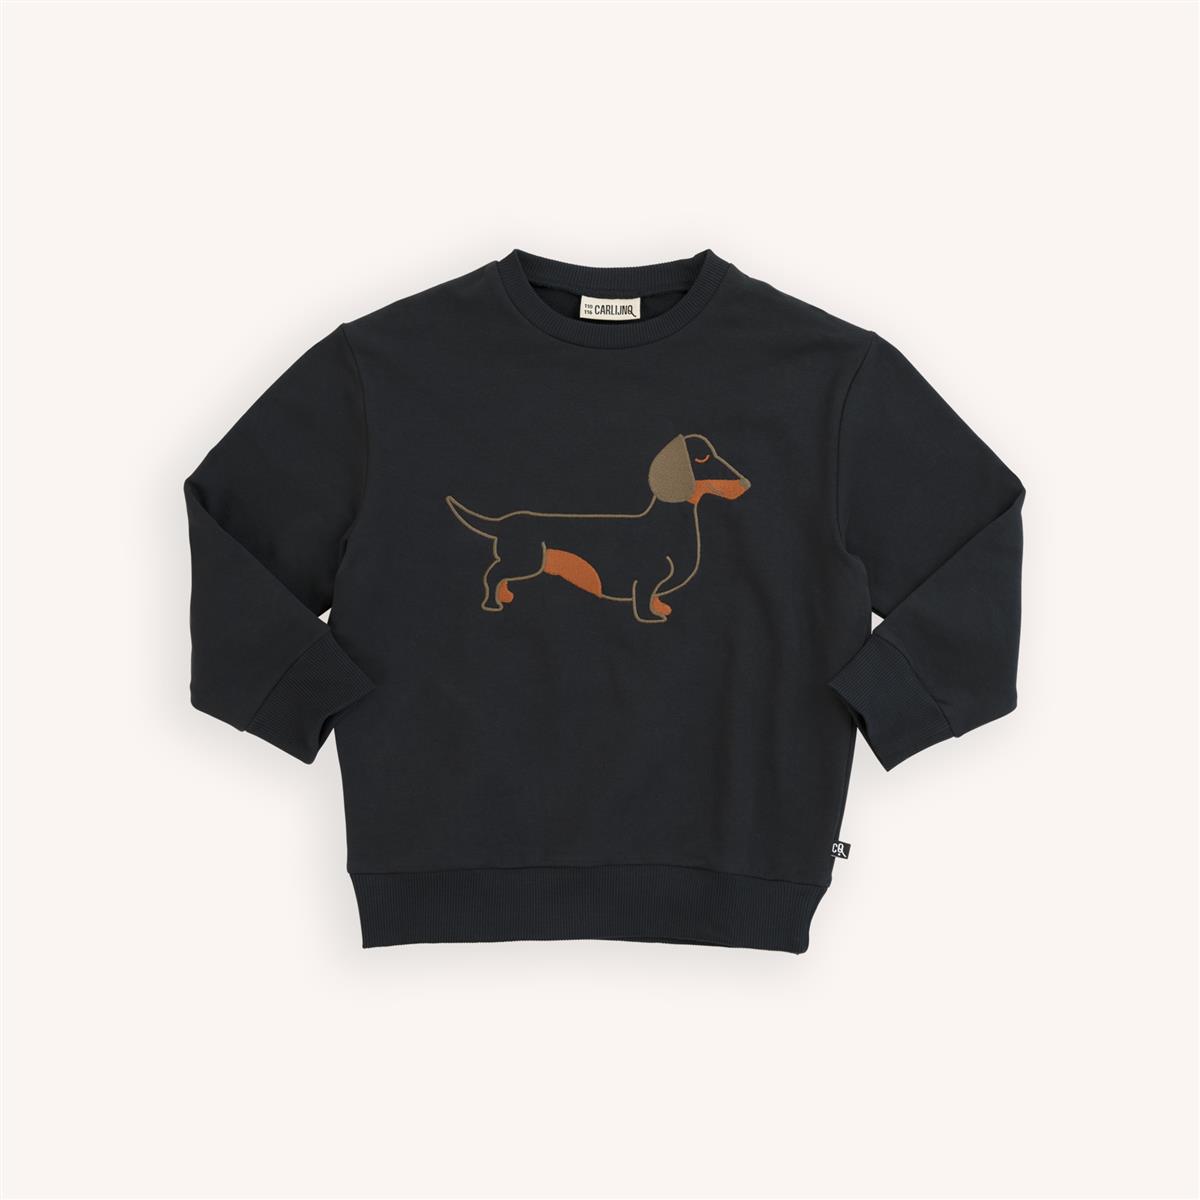 CARLIJNQ - Dachshund - sweater with emroidery (black)